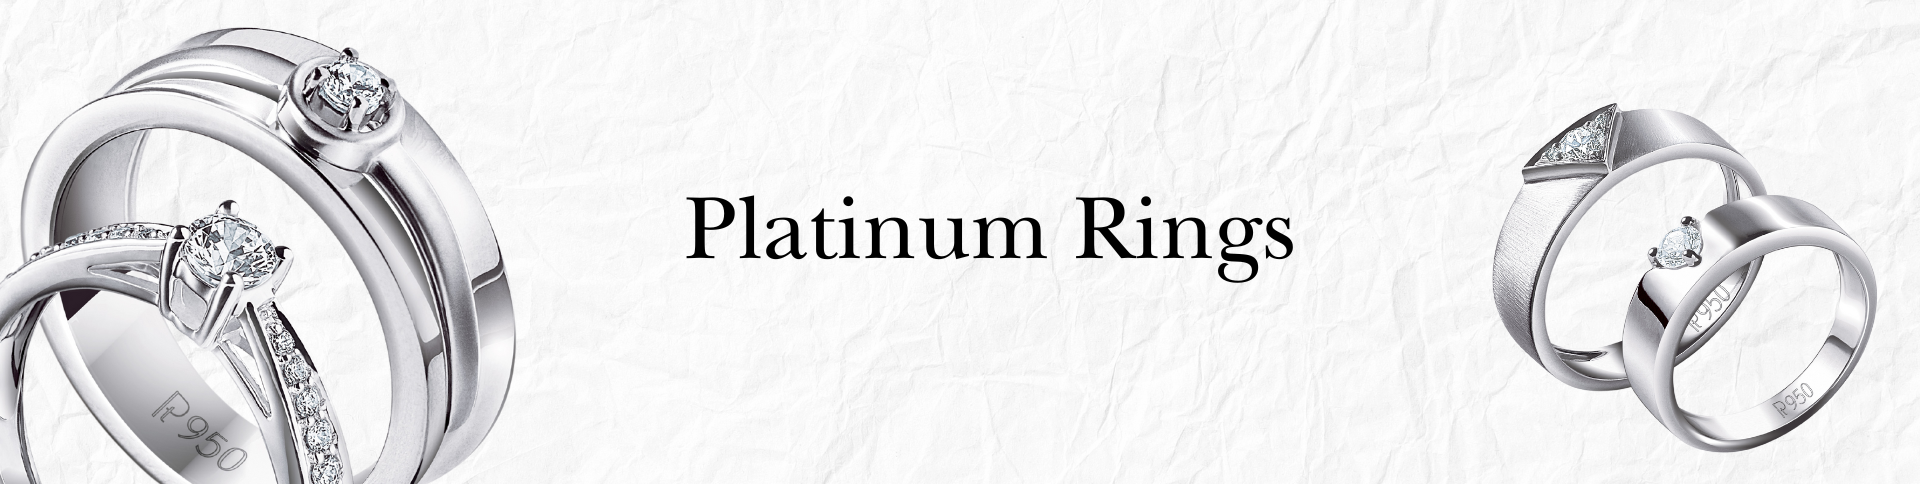 Buy Malabar Gold and Diamonds PT (950) Platinum gold Bands Ring for Women,  Platinum 950 PGI certified JIRR5630L_P_VVSVS-GH_12 at Amazon.in